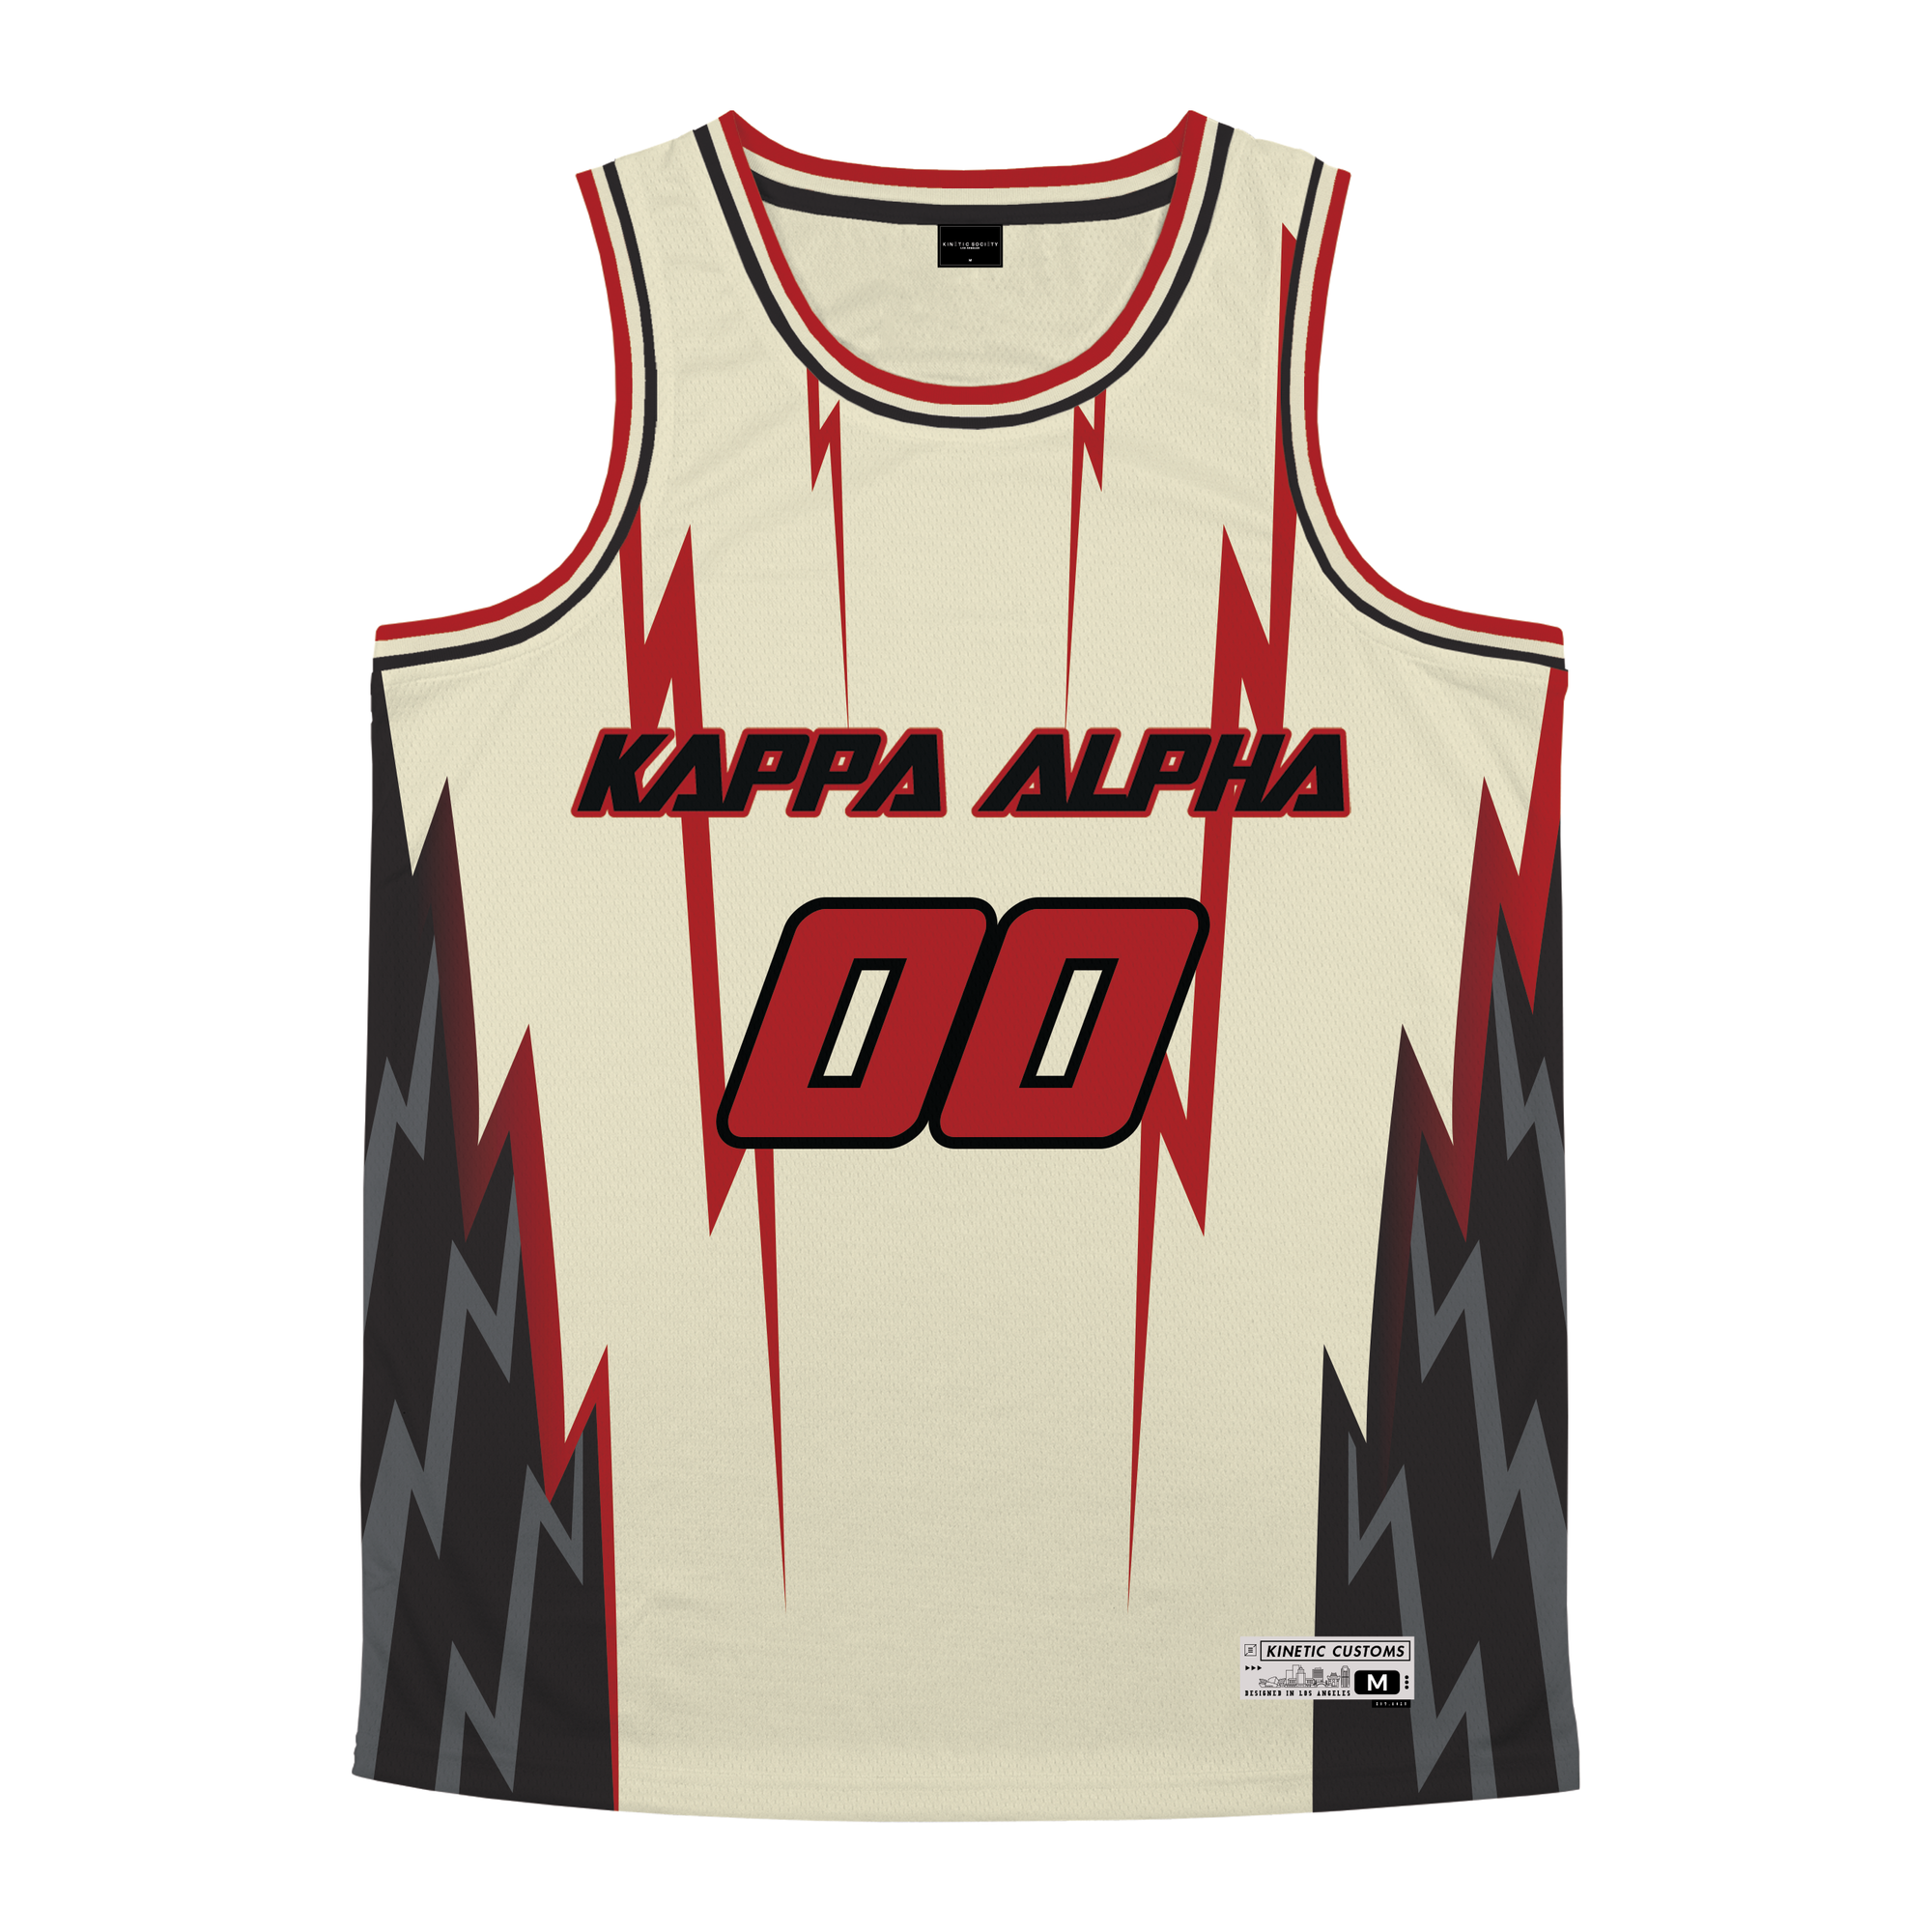 Kappa Alpha Order - Rapture Basketball Jersey